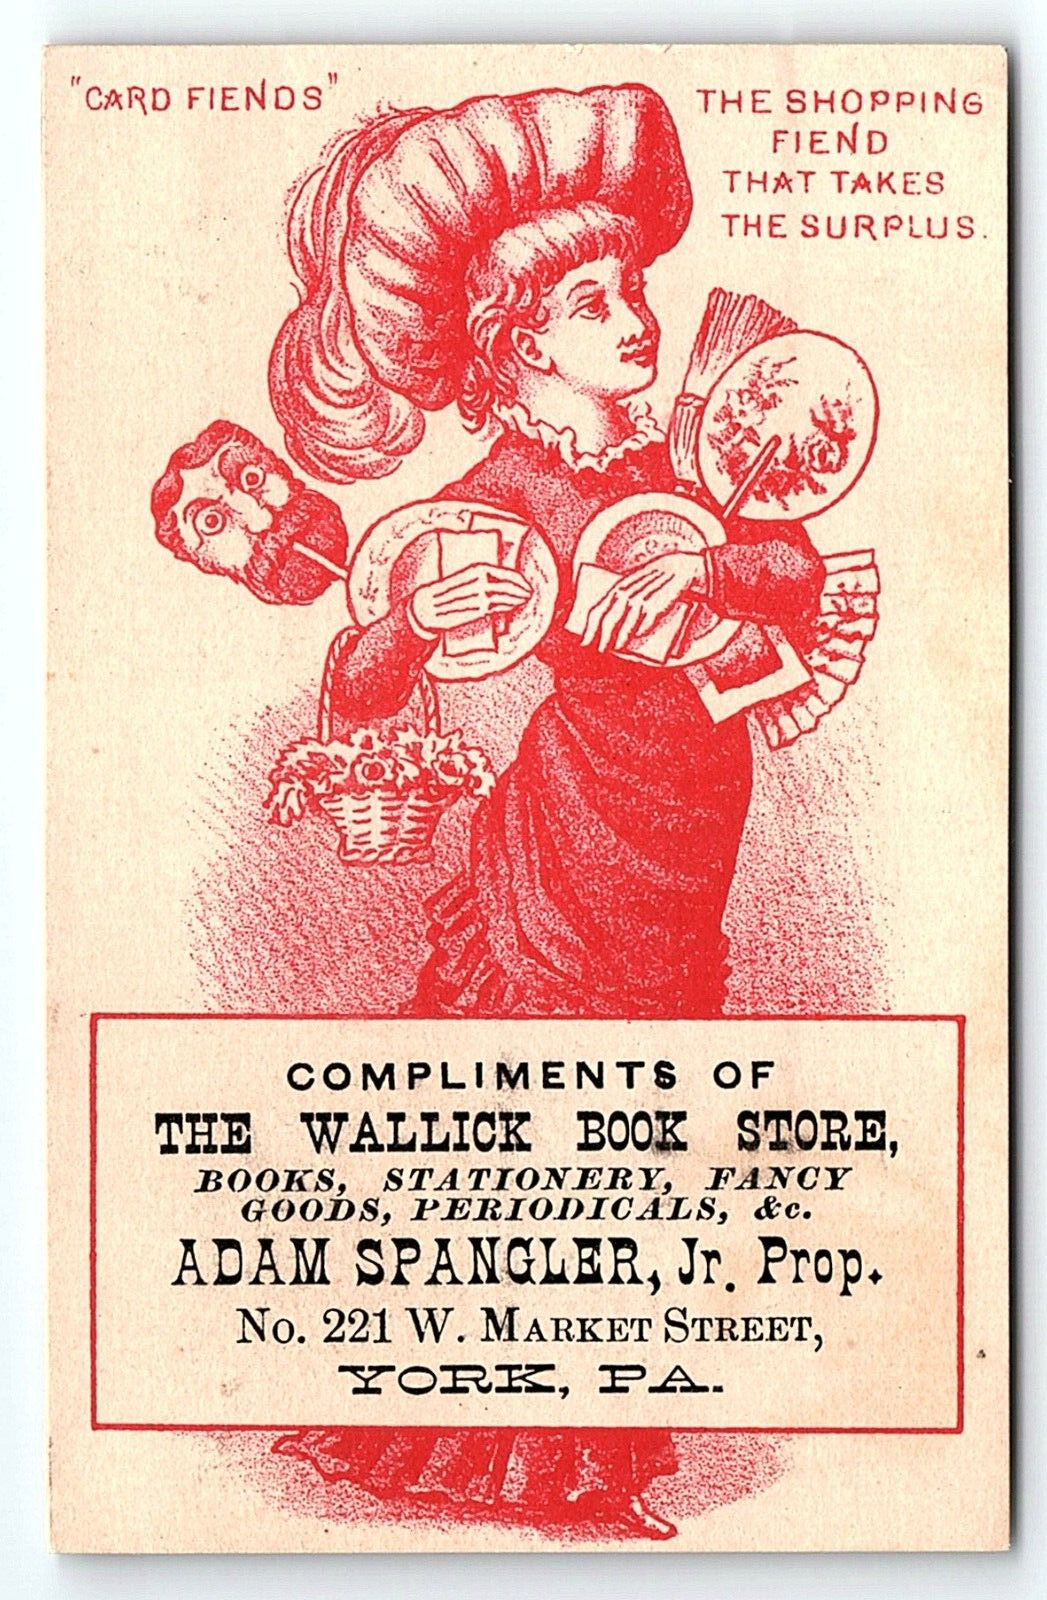 c1880 WALLICK BOOK STORE YORK PA ADAM SPANGLER JR ADVERTISING TRADE CARD P1738